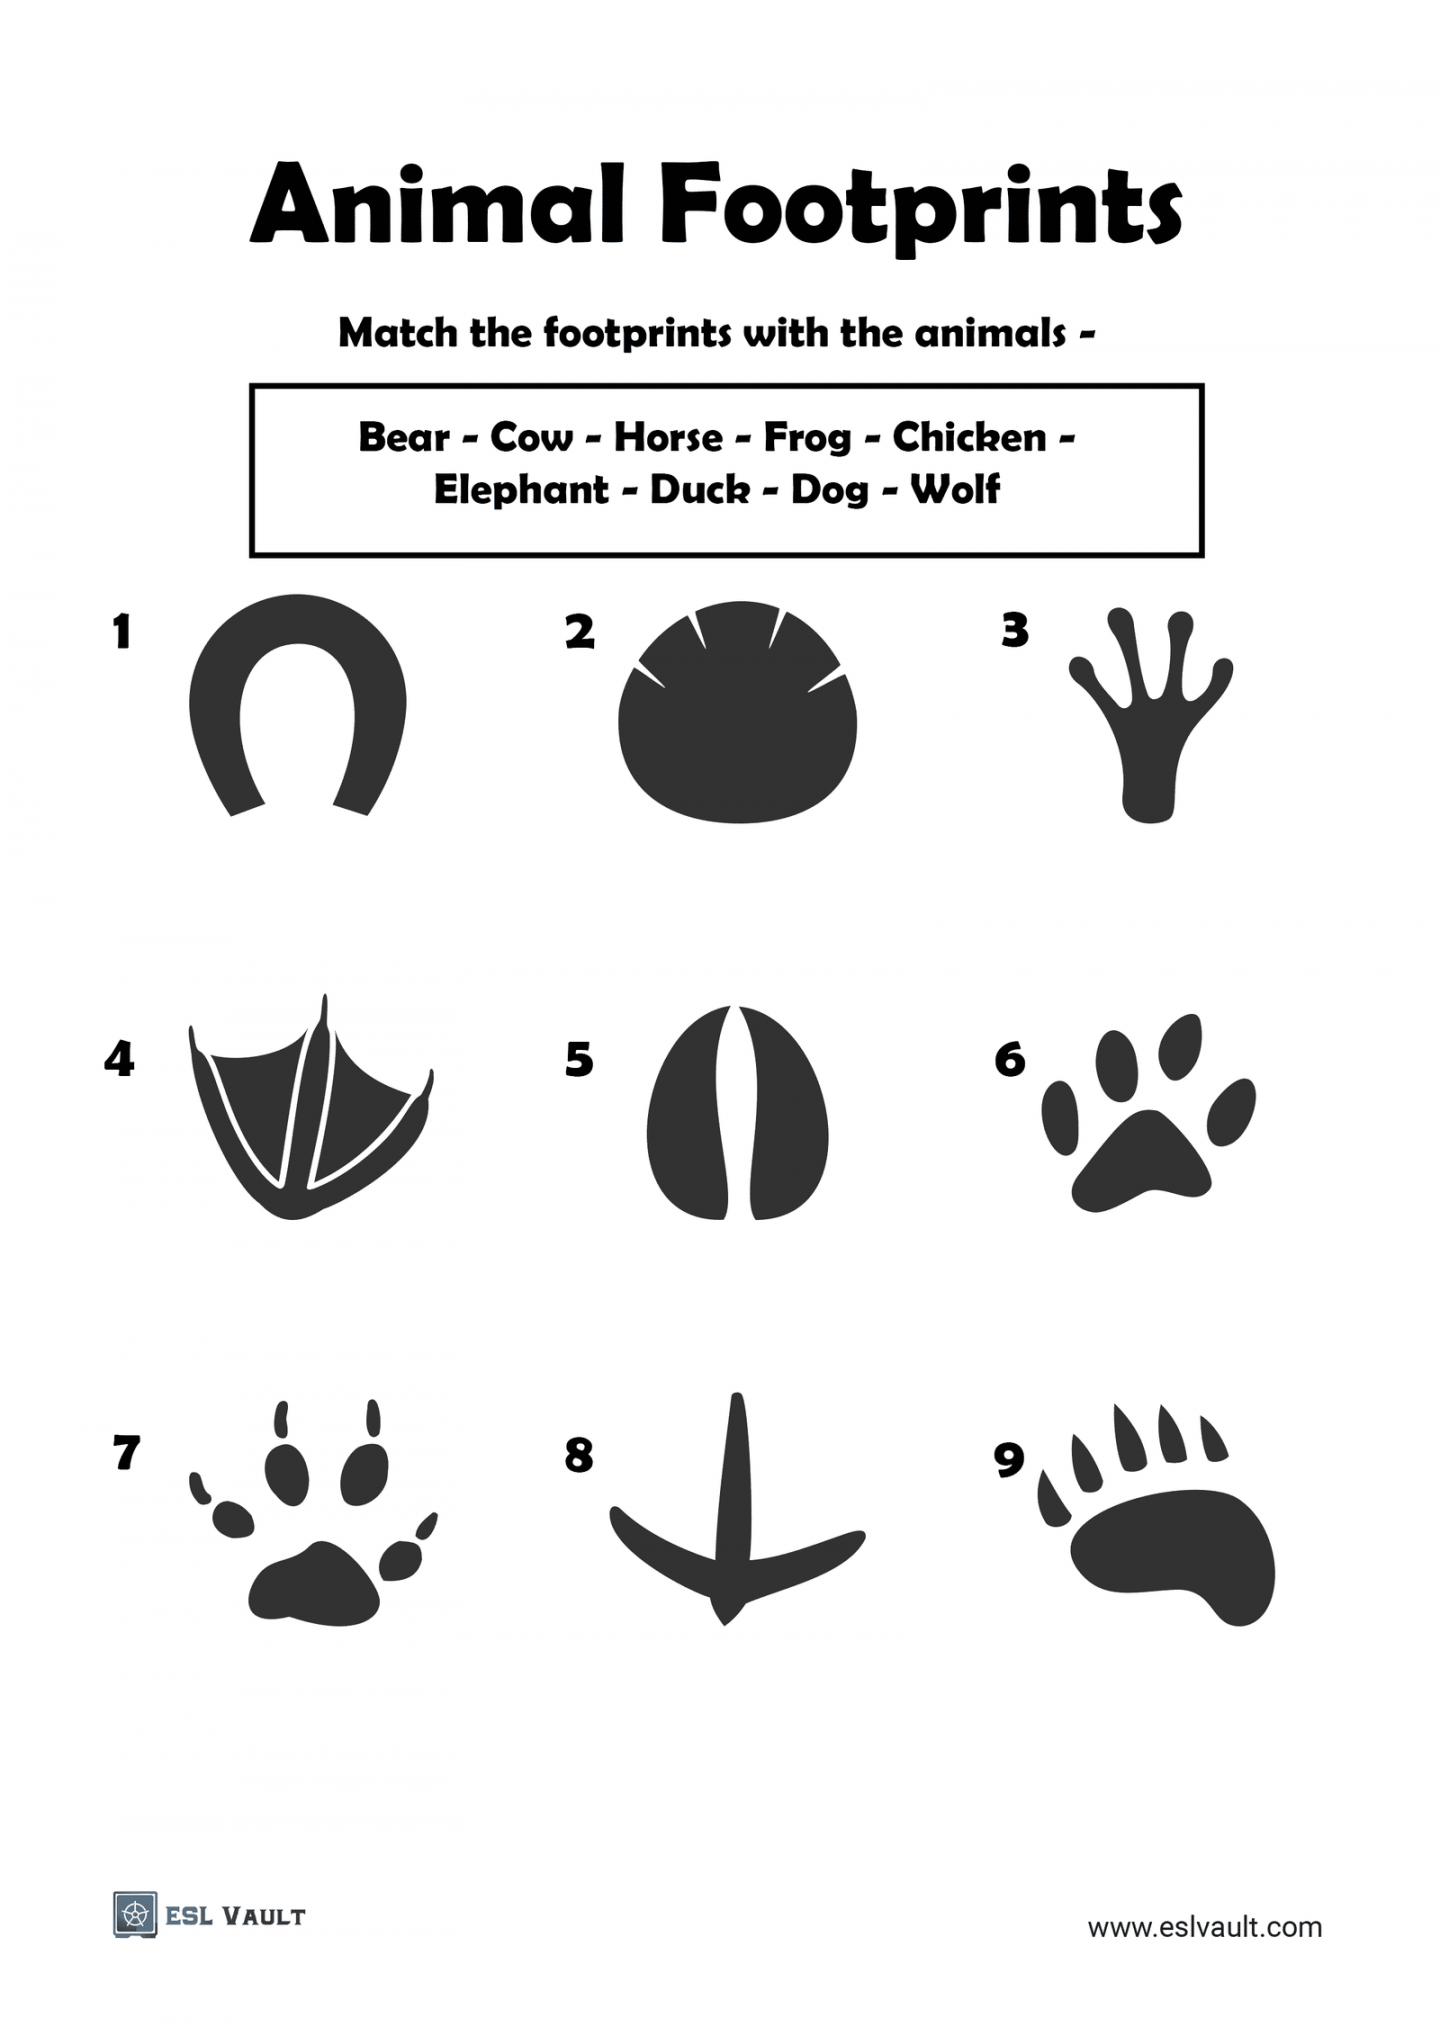 animal footprints worksheets - ESL Vault